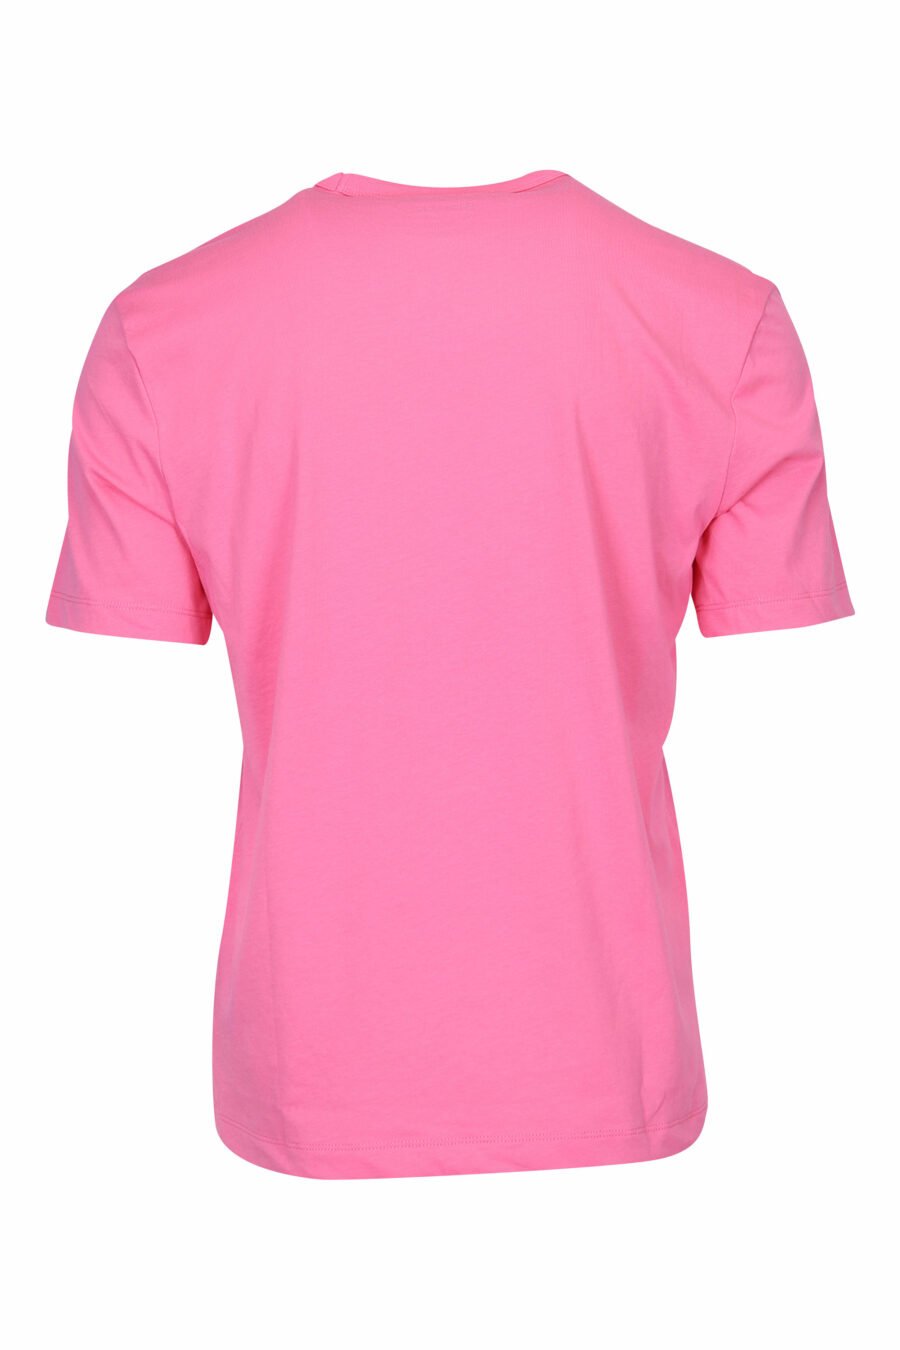 T-shirt rosa com maxilogo monocromático ao centro - 8058610799205 1